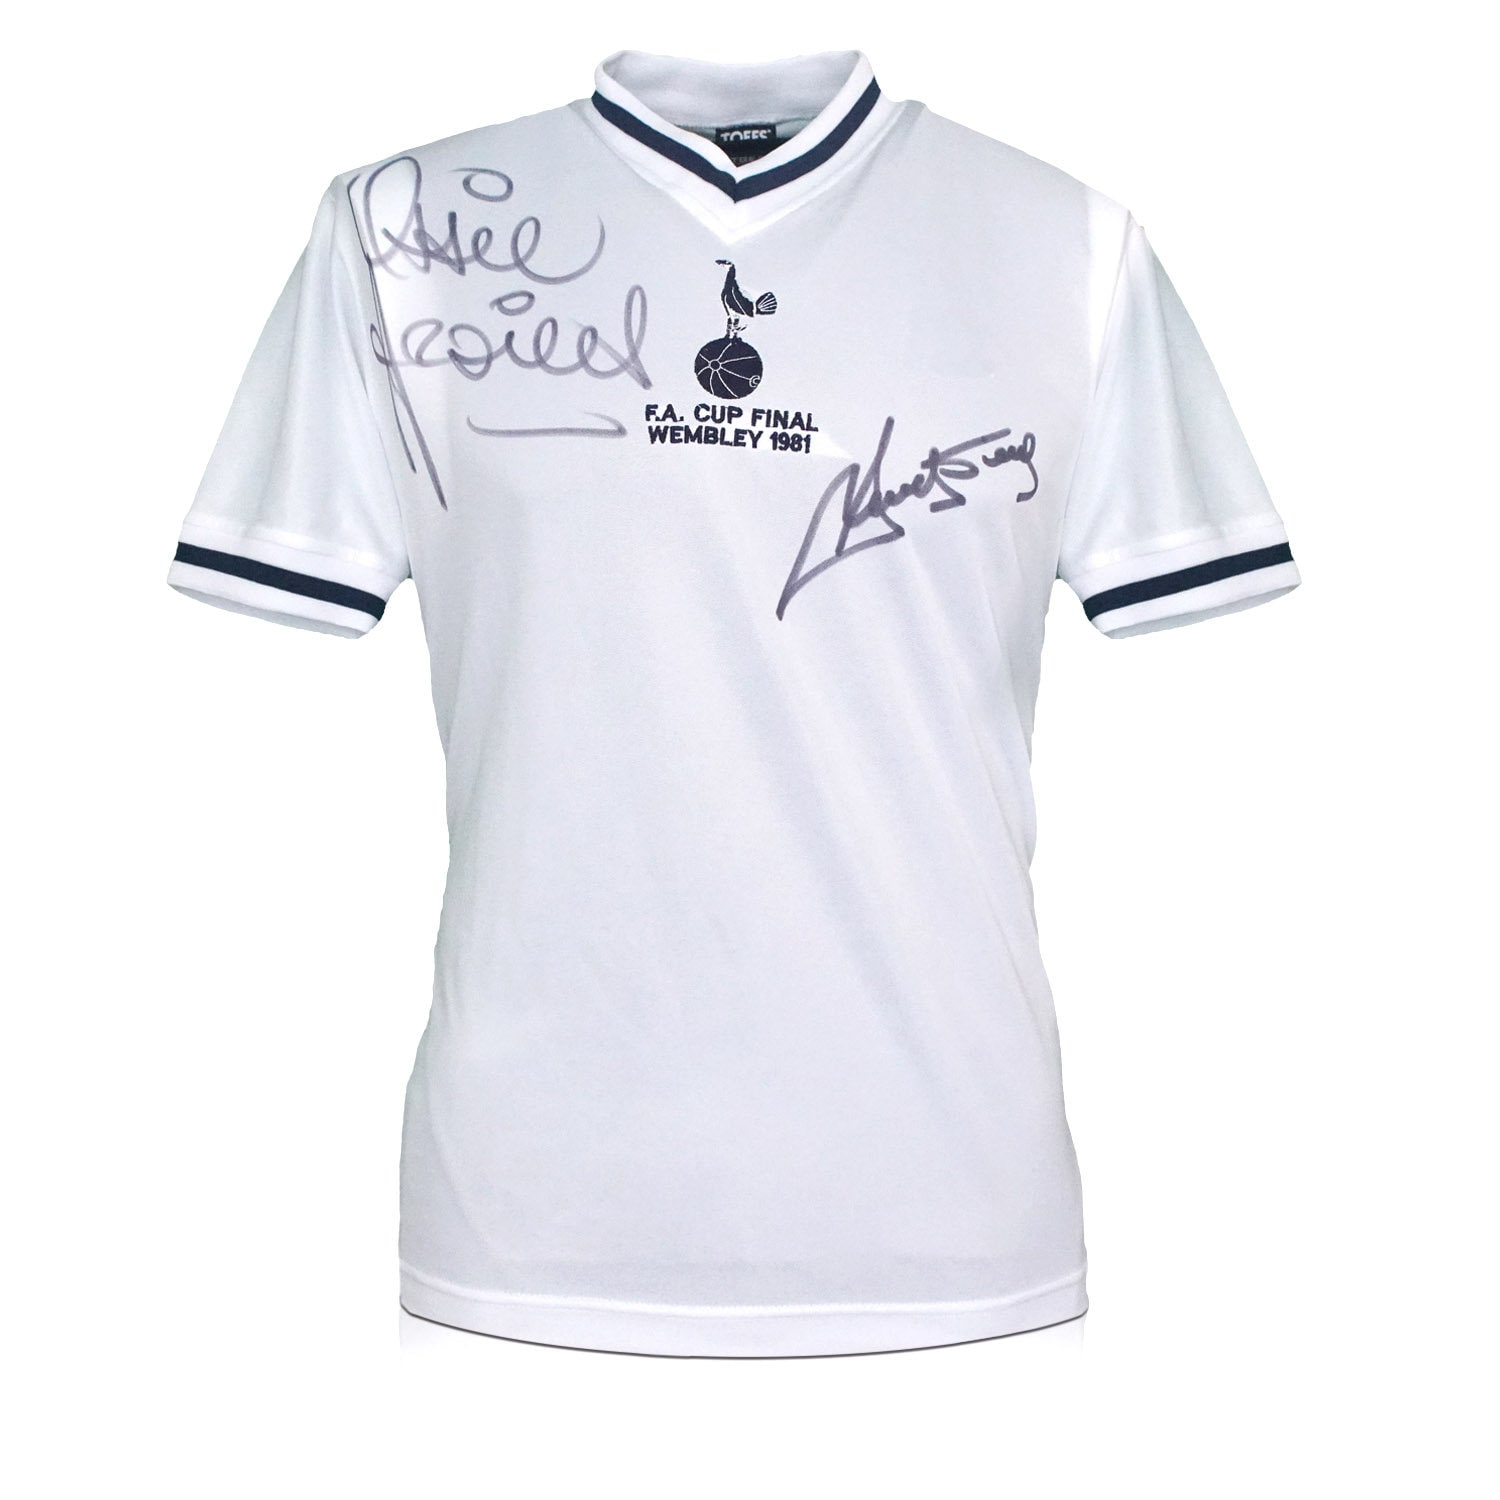 Tottenham Hot Spurs 1984 Uefa Cup Final - Signed Autographed